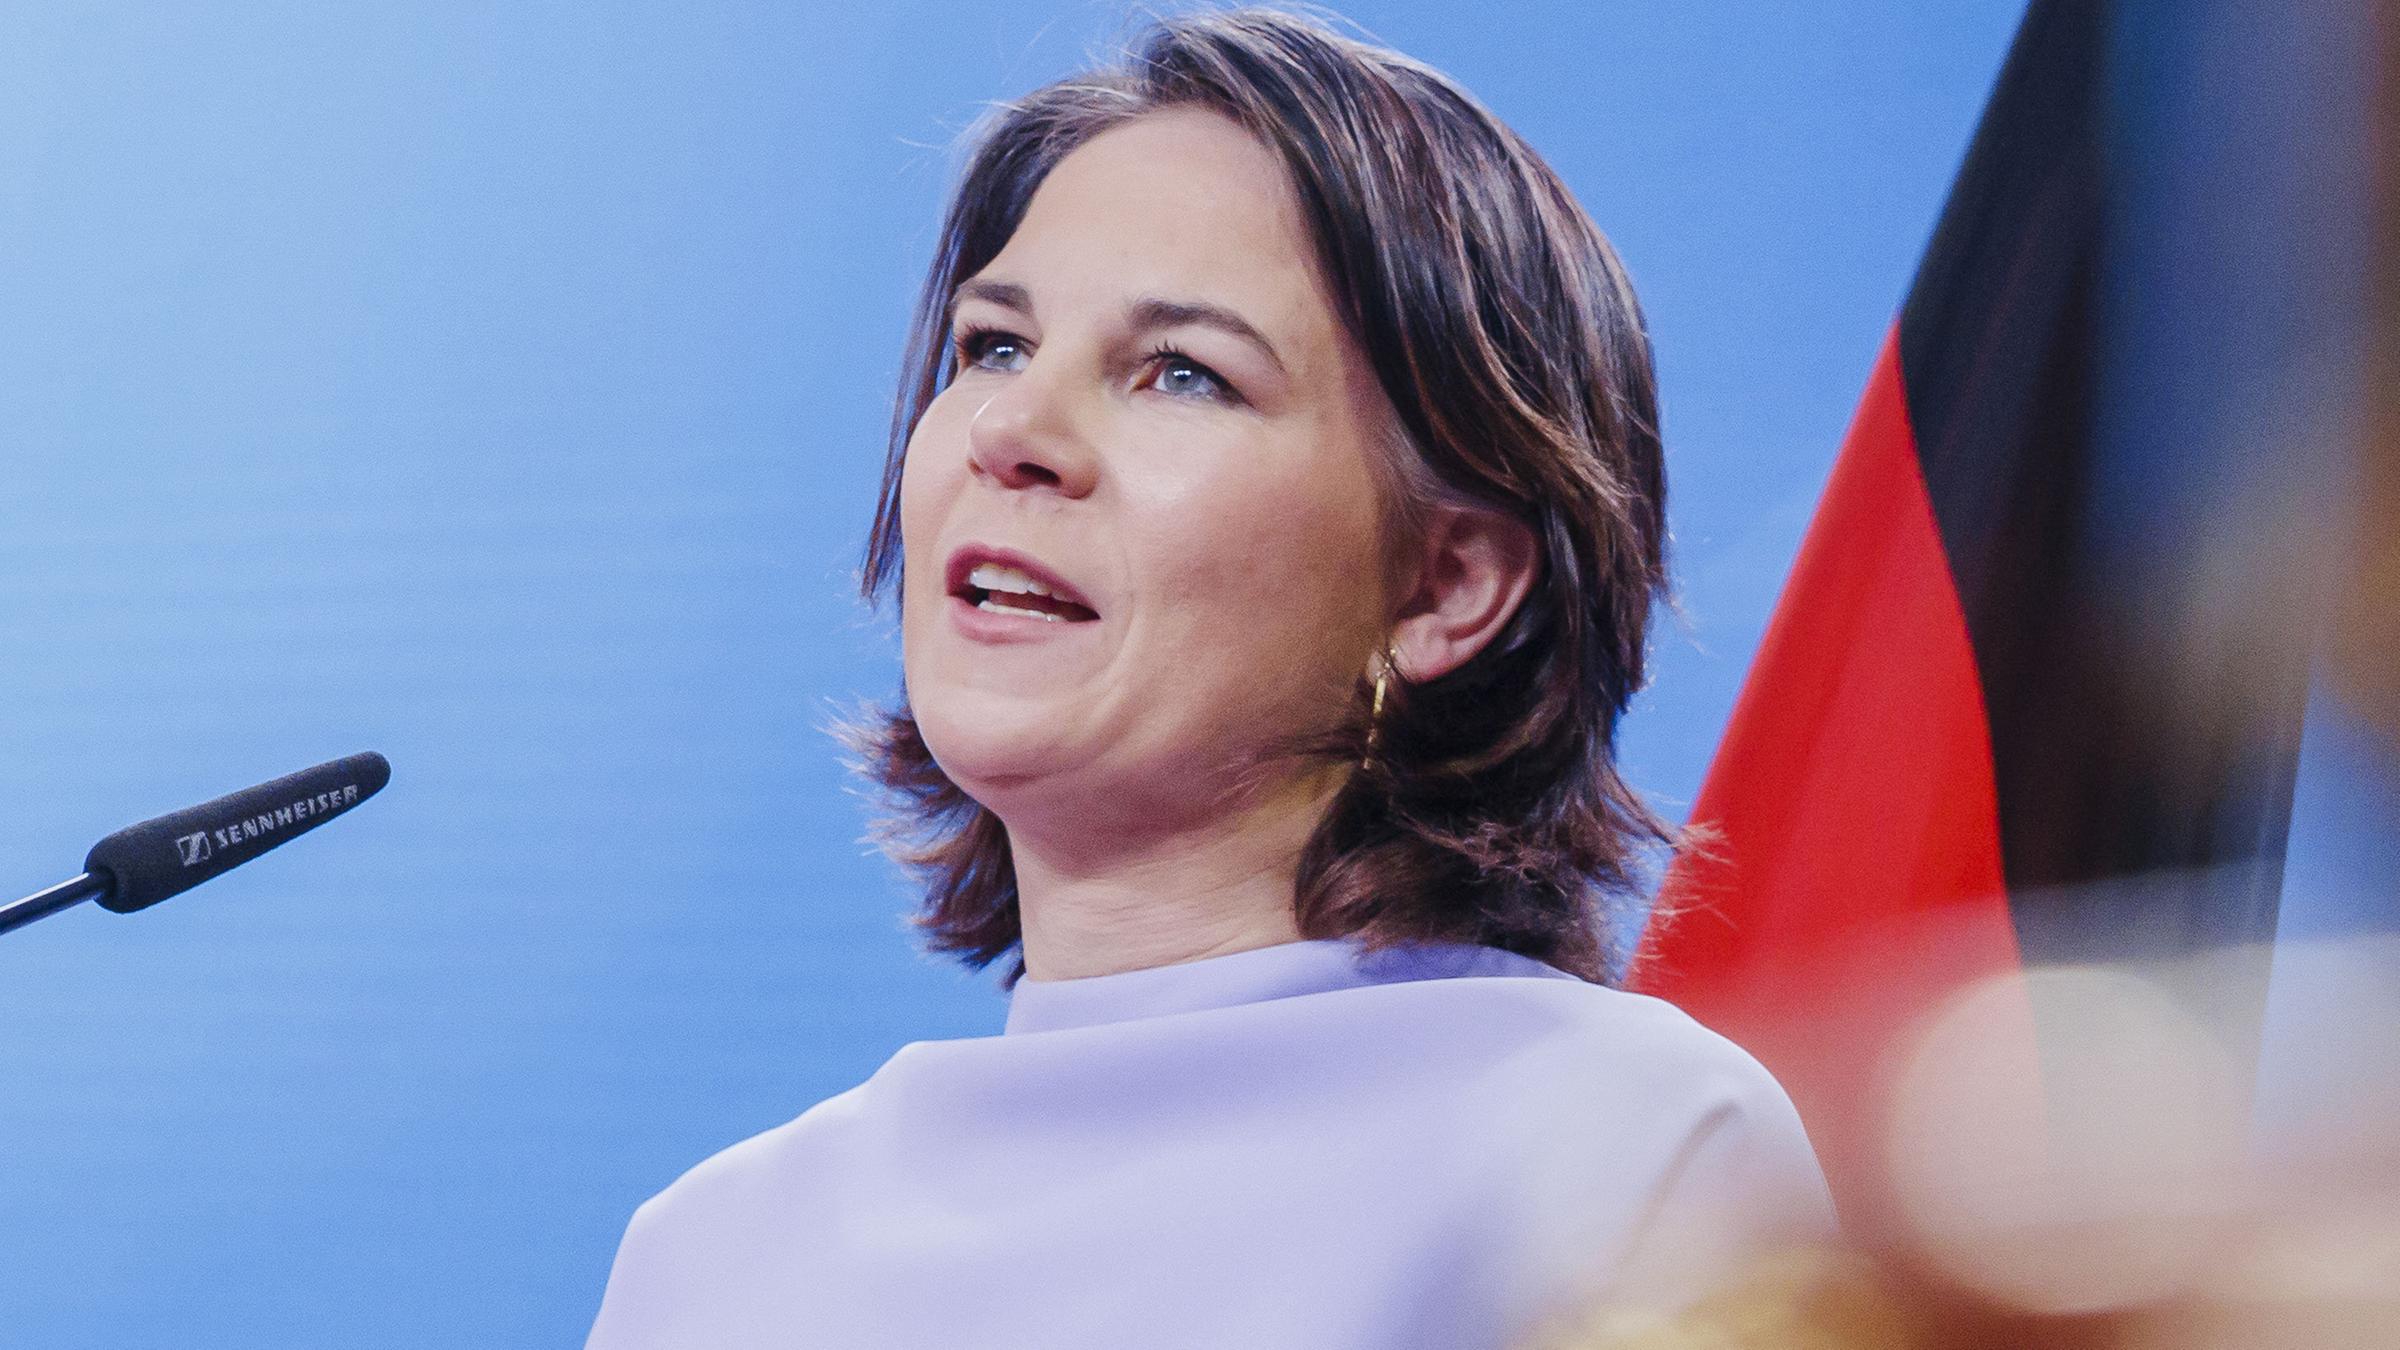 Annalena Baerbock in Berlin on February 9, 2022 